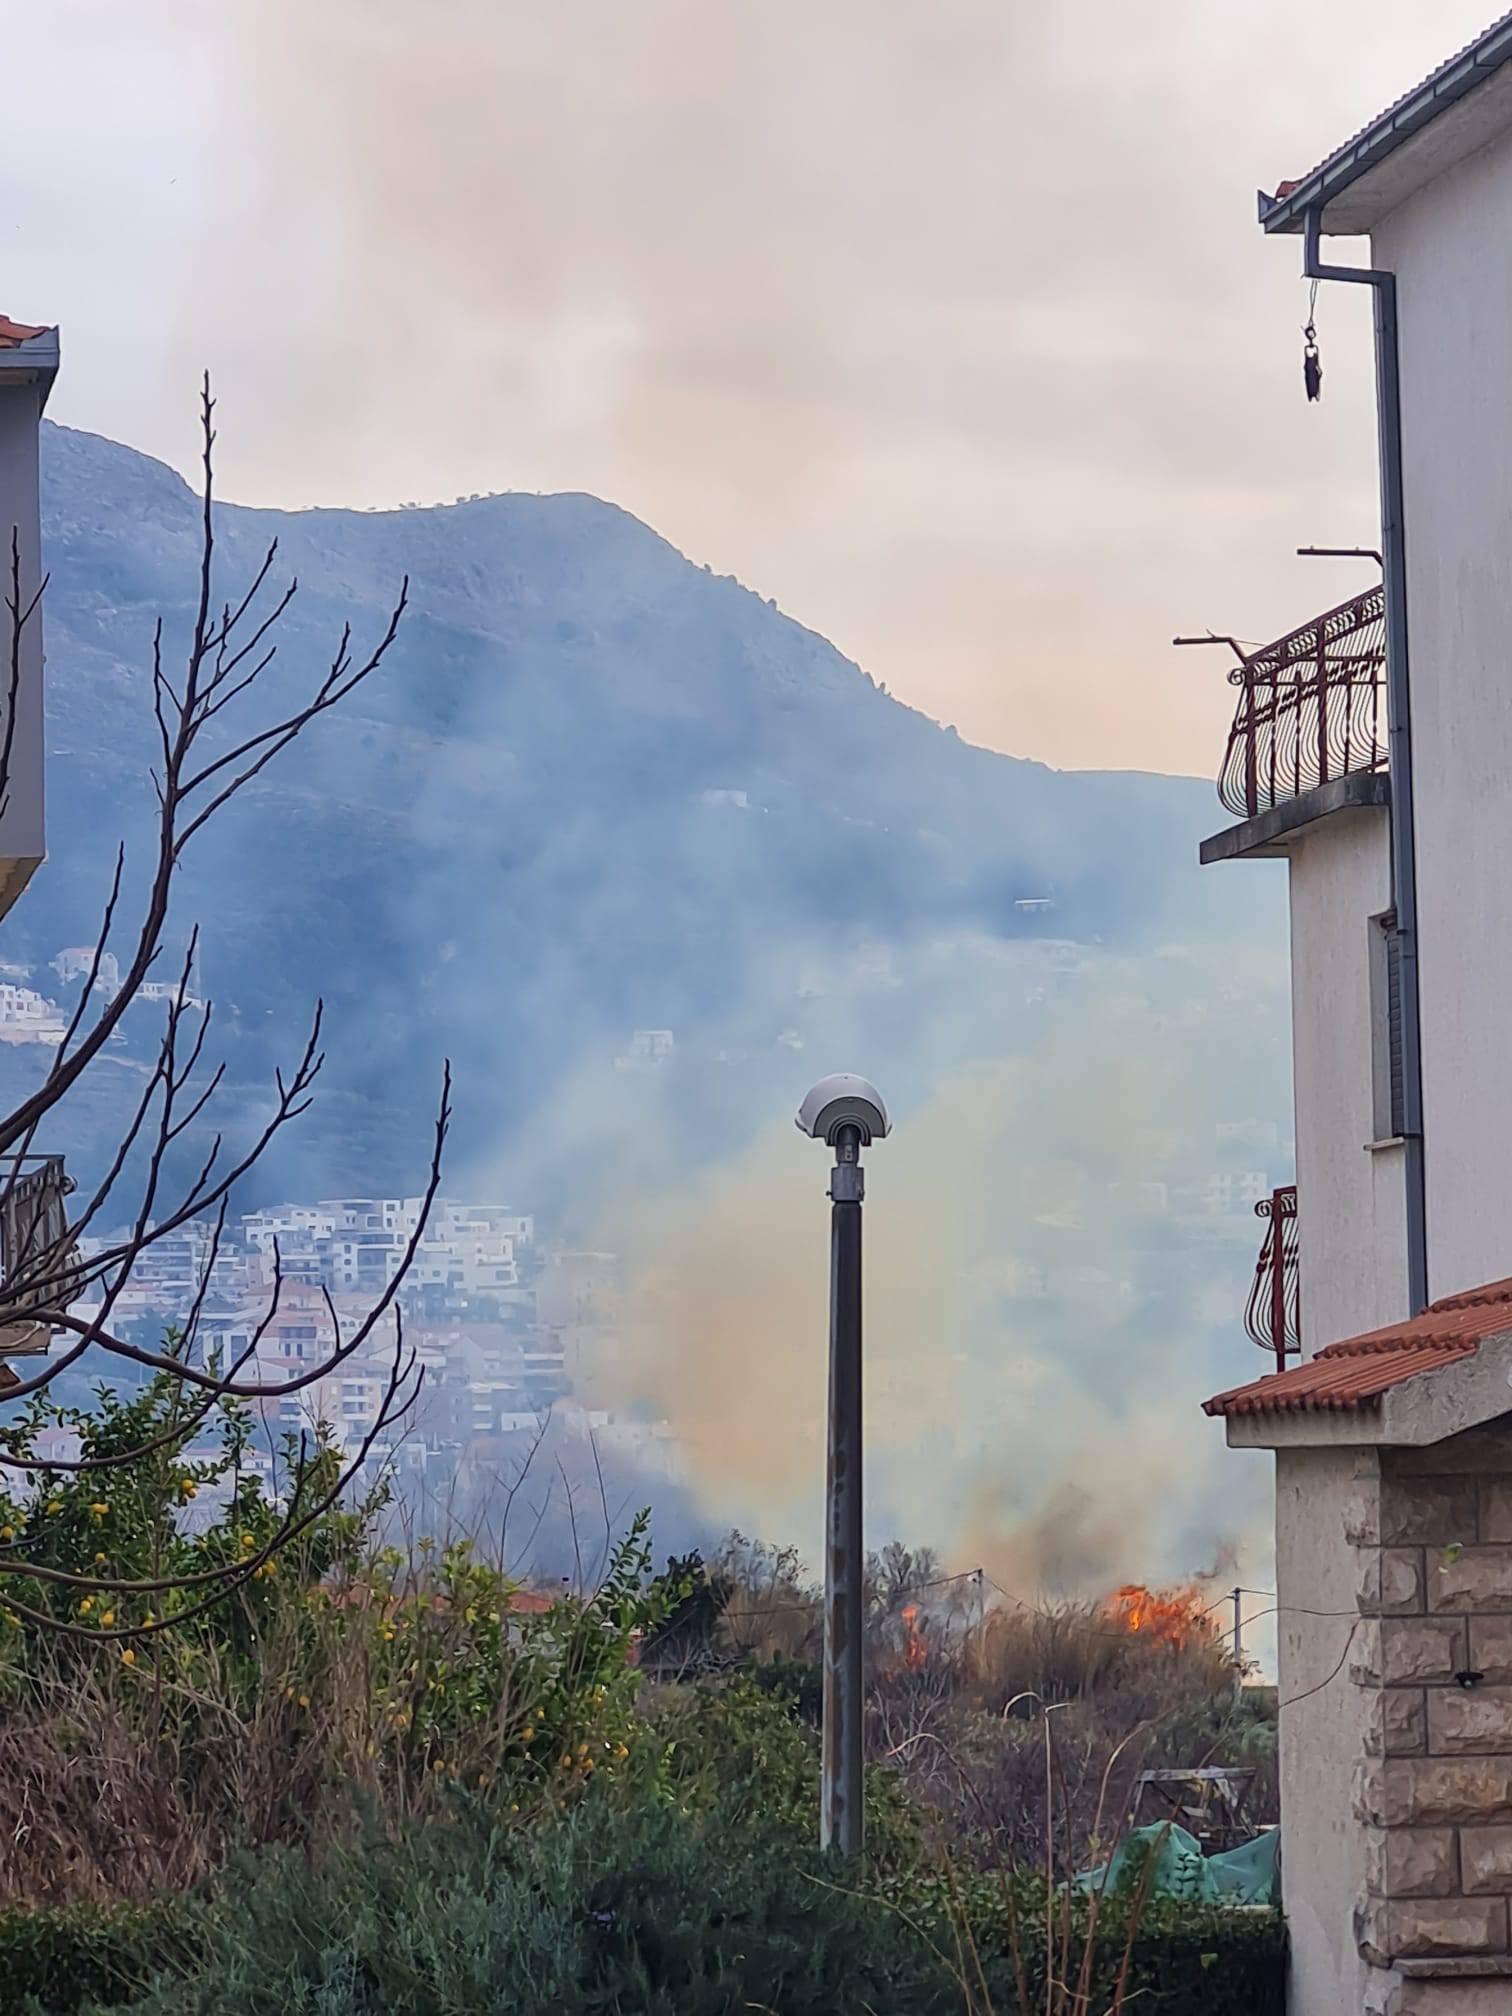 Požar u Žrnovici: 'Diže se gust dim i plamen je ogroman. Strah nas je jer su u blizini kuće'